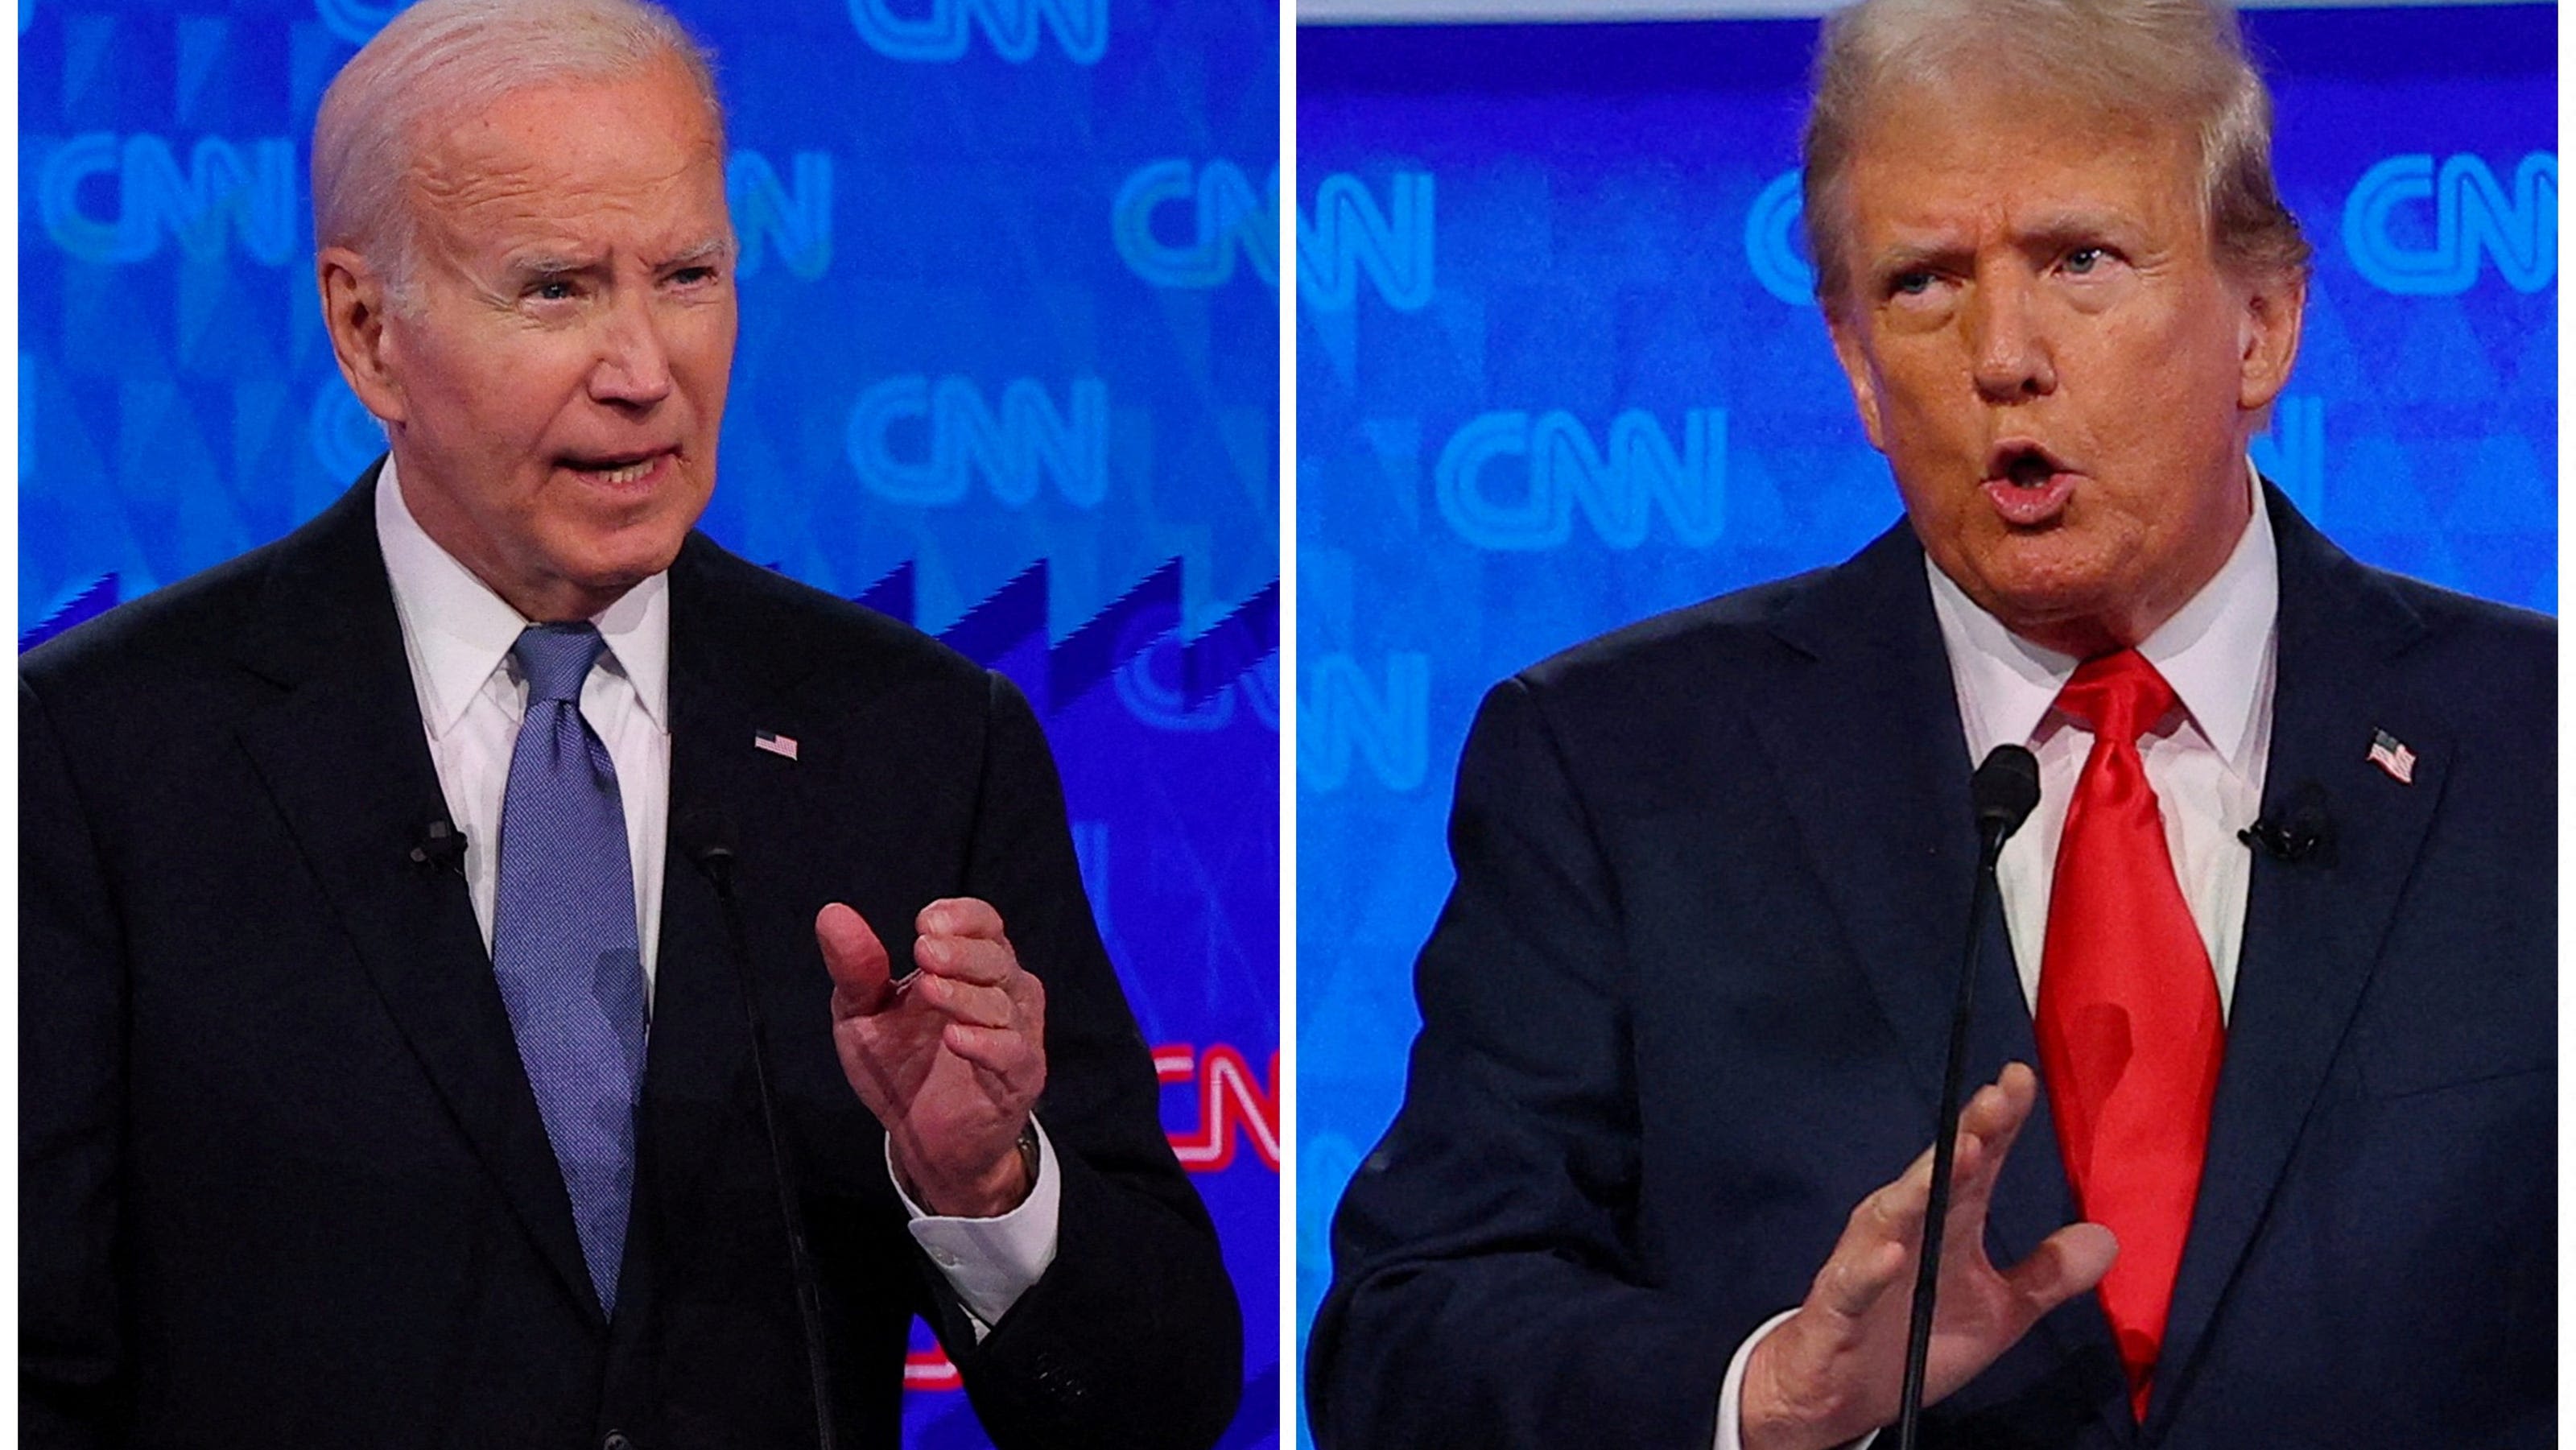 DeSantis declares Biden done after debate with Trump while Florida Democrats regroup